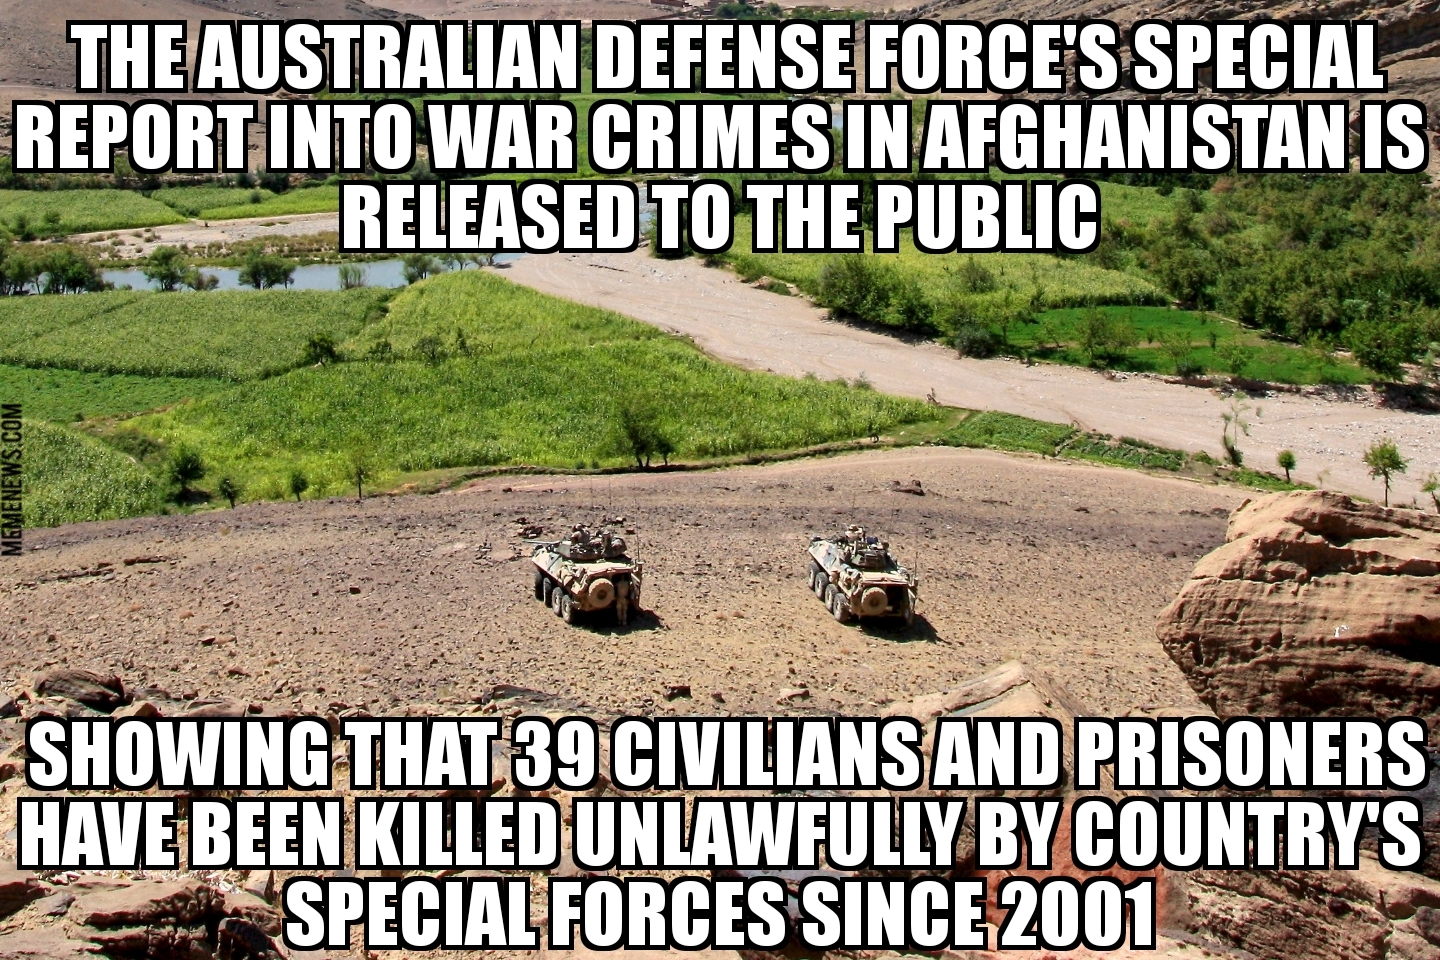 Australian Special Forces unlawful killings in Afghanistan